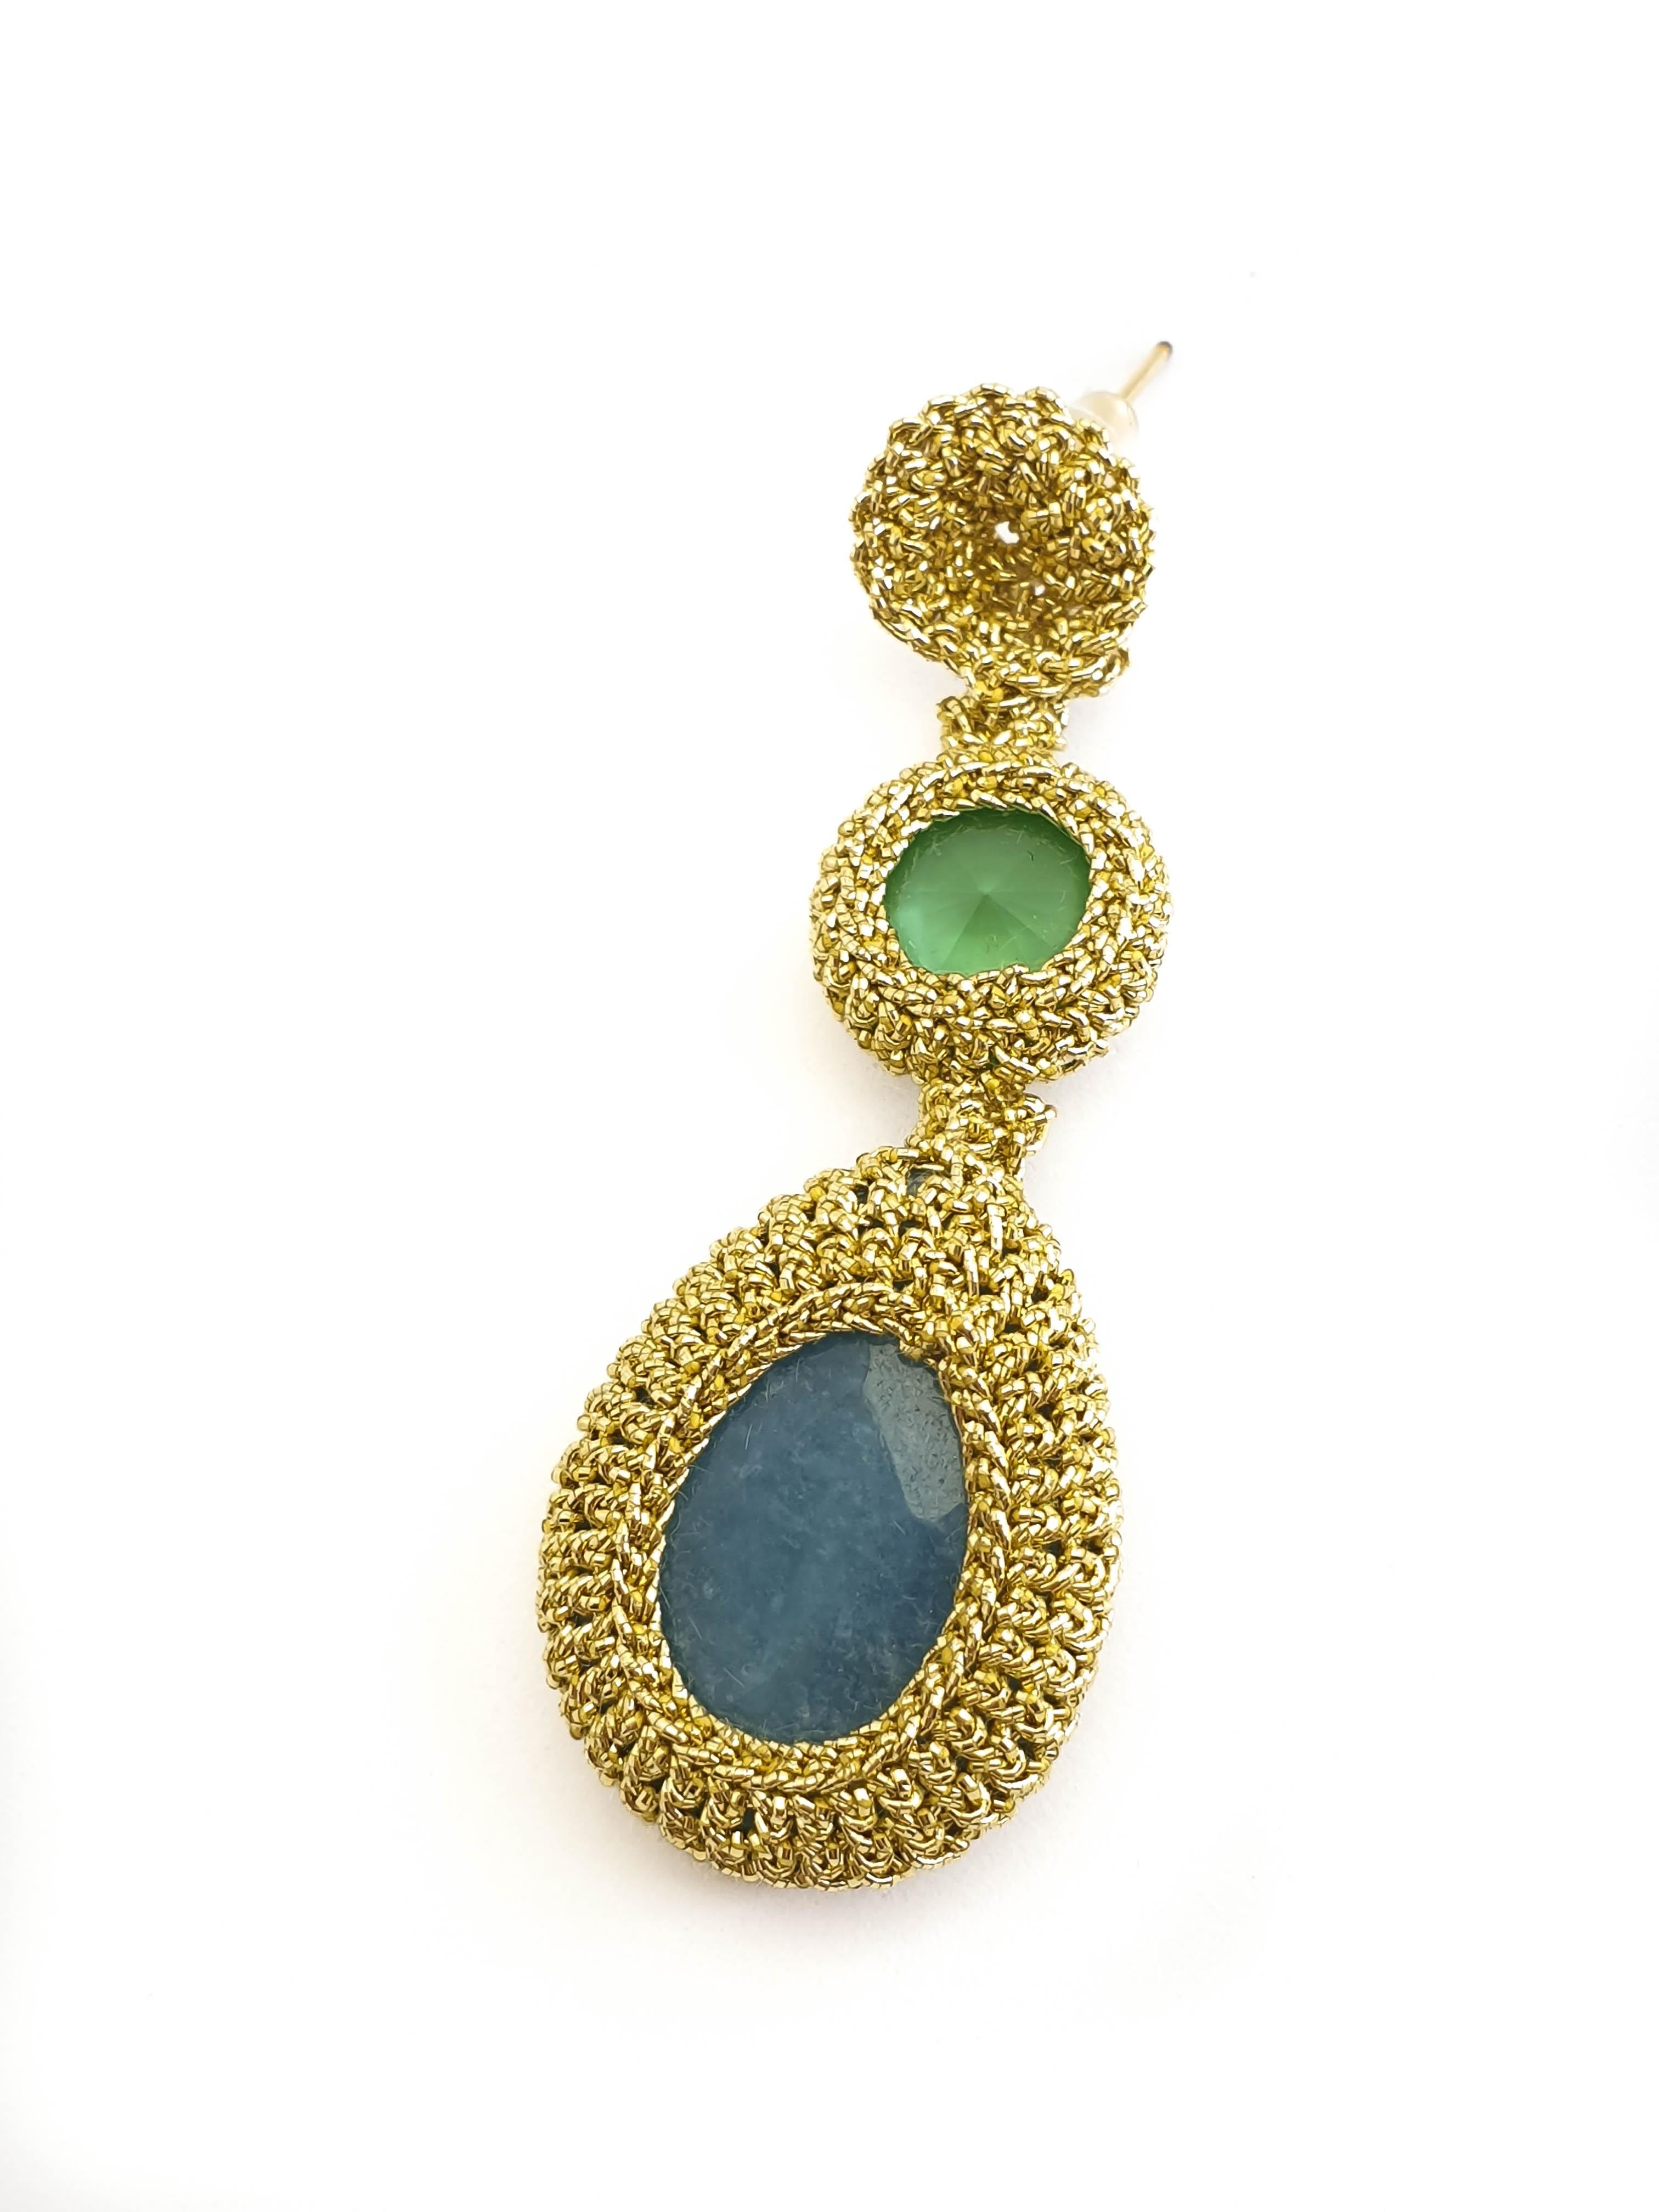 Gold Color Thread Crochet Contemporary Earrings Jade Swarovski Crystals Artistic In New Condition For Sale In Kfar Saba, IL